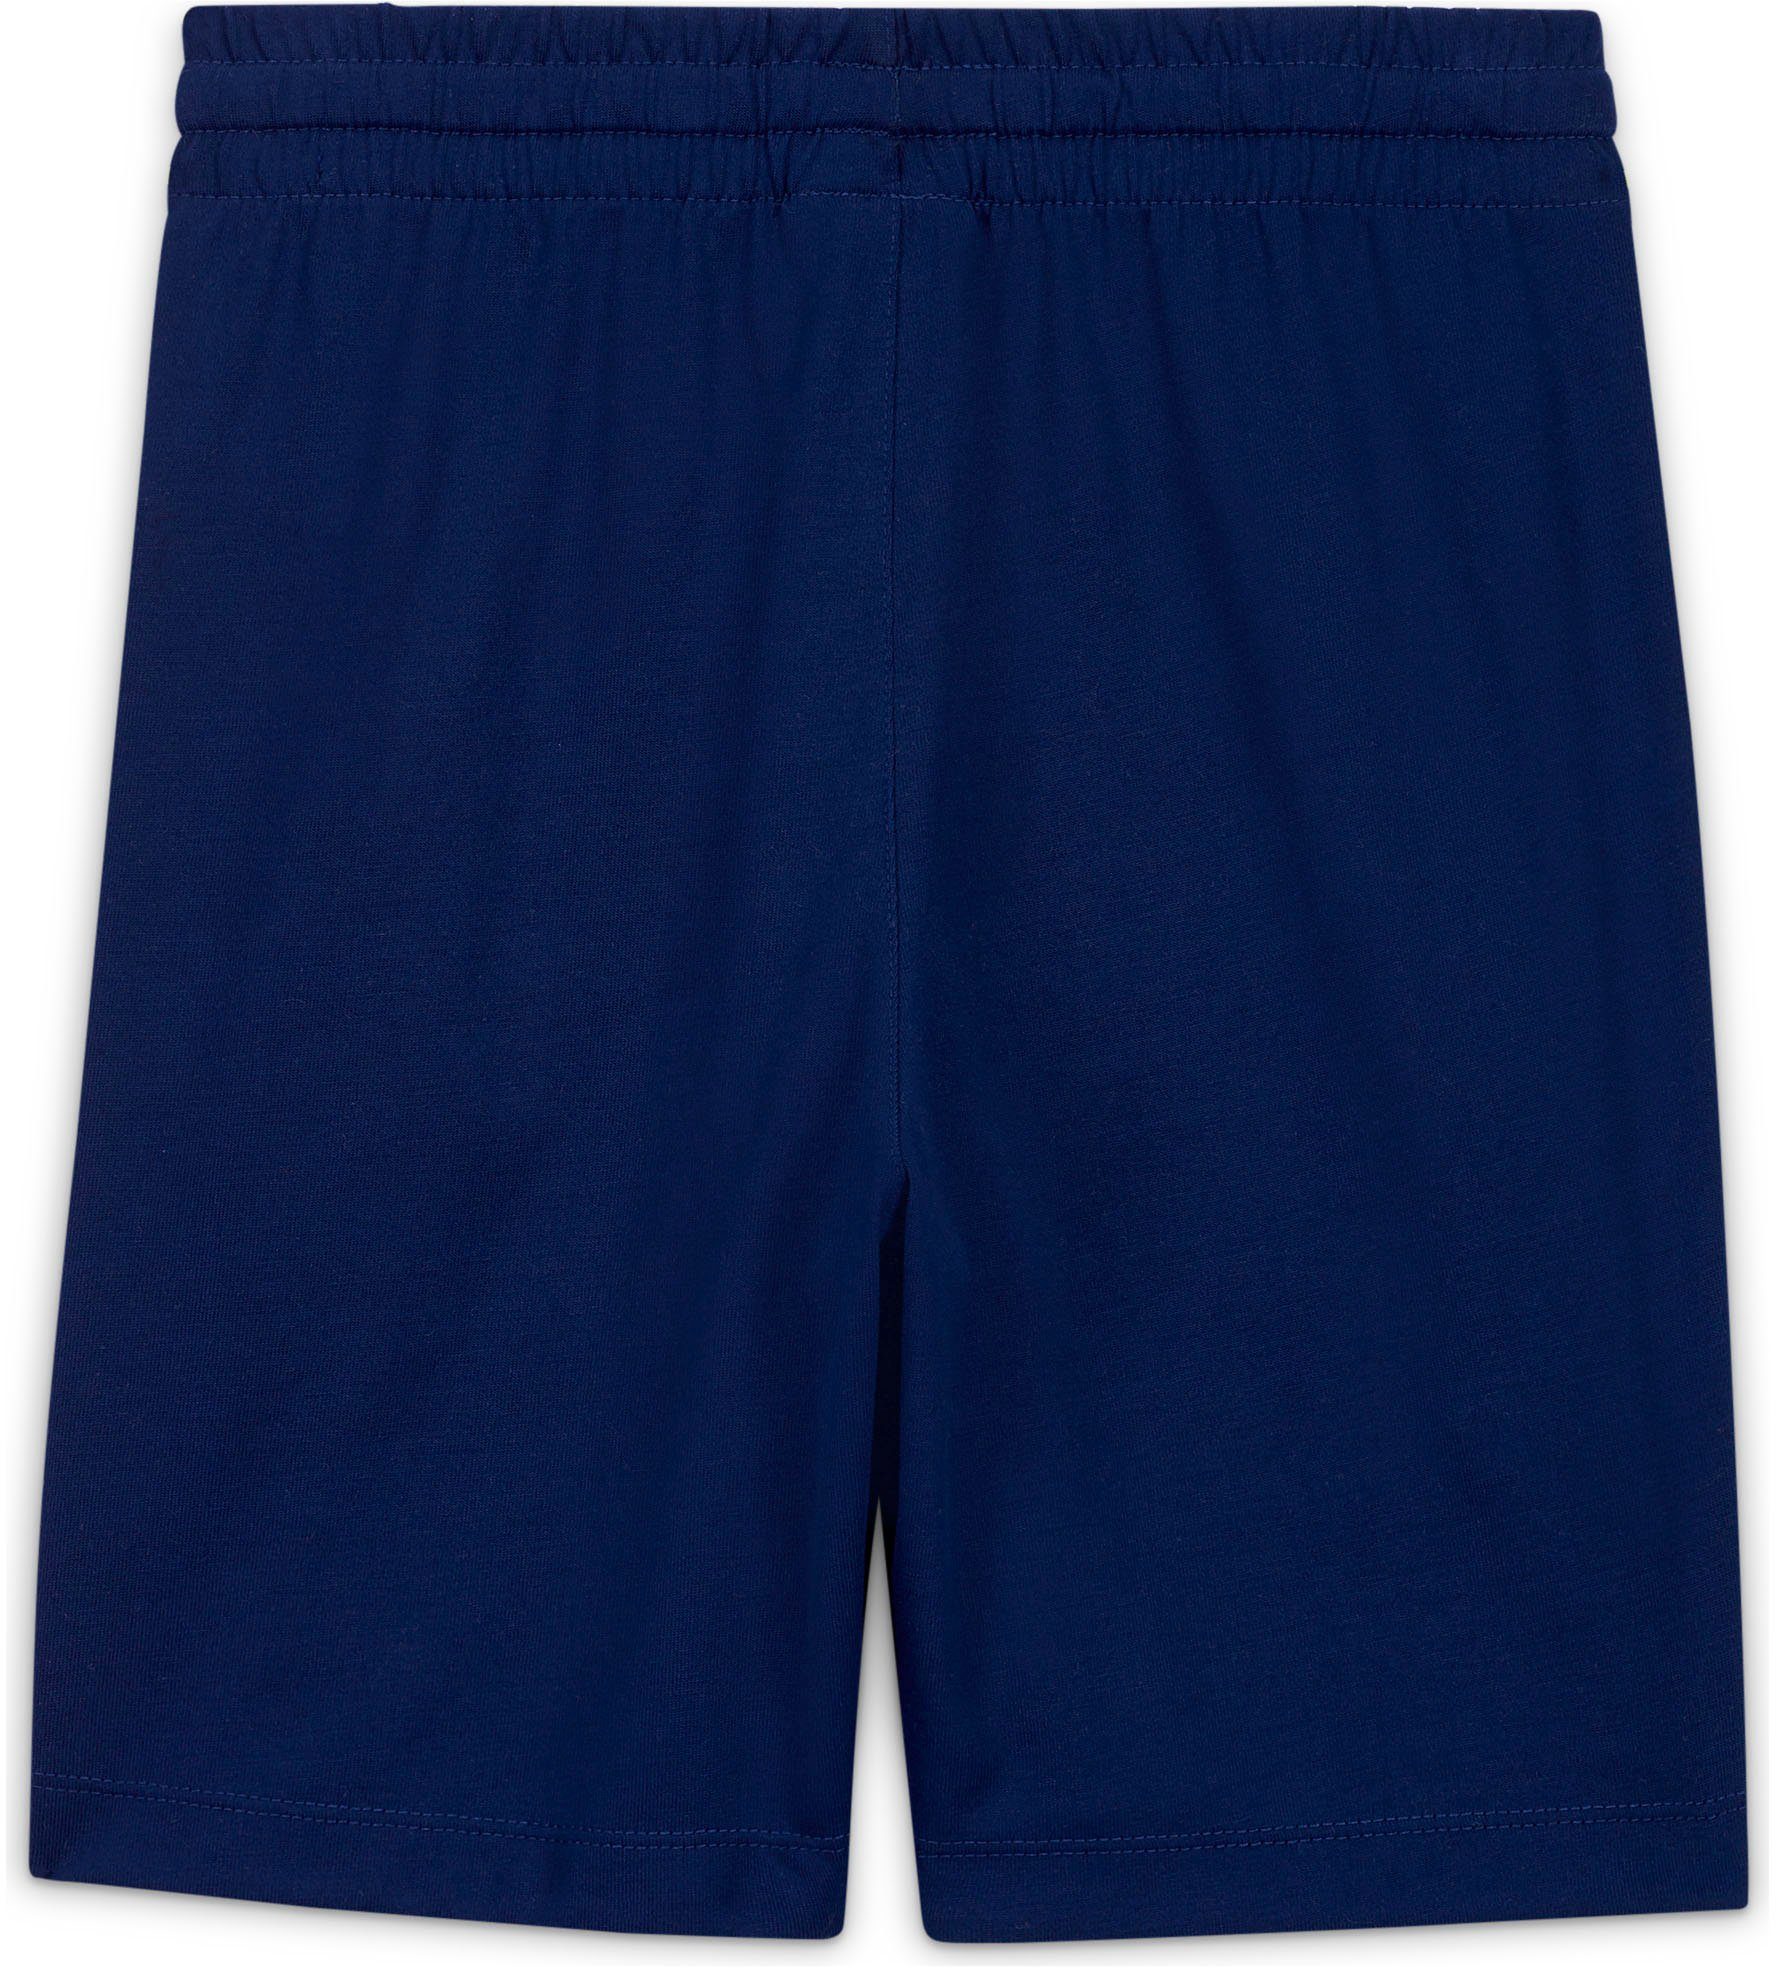 JERSEY SHORTS BIG Shorts Nike KIDS' (BOYS) dunkelblau Sportswear